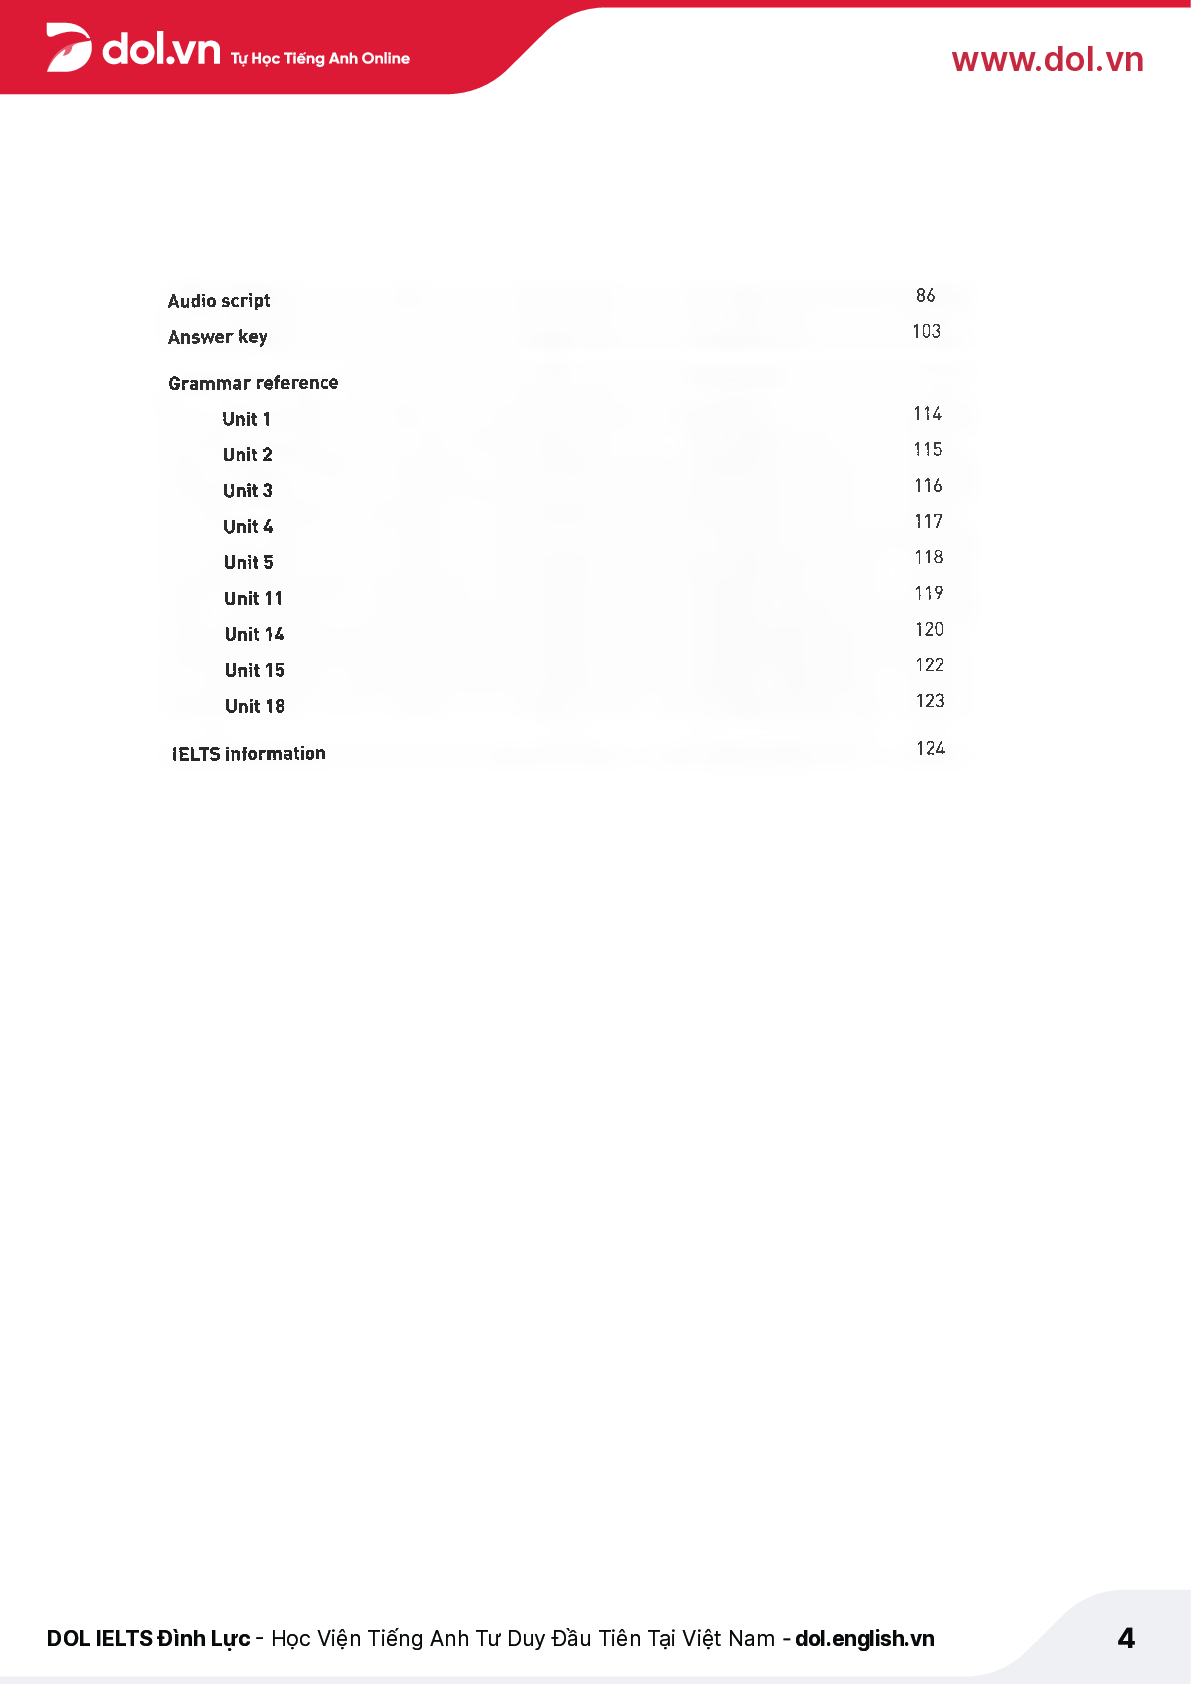 Sách Collins Grammar For IELTS pdf | Xem online, tải PDF miễn phí (trang 4)